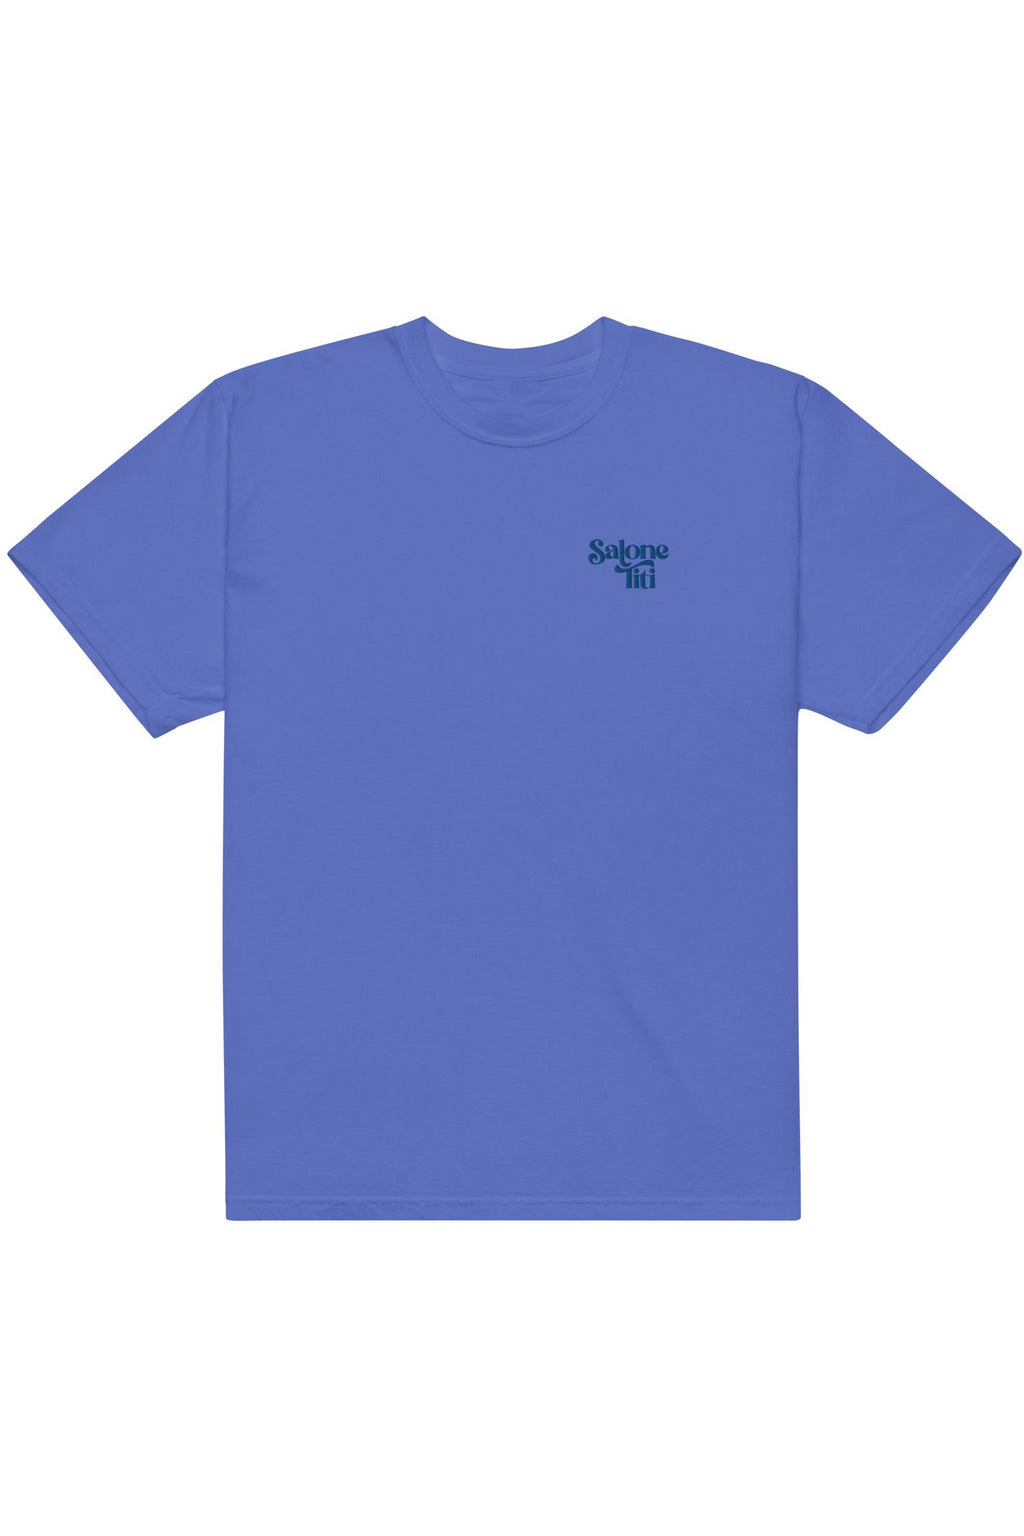 Salone Titi Tee-Blue - Mission LaneT-Shirt